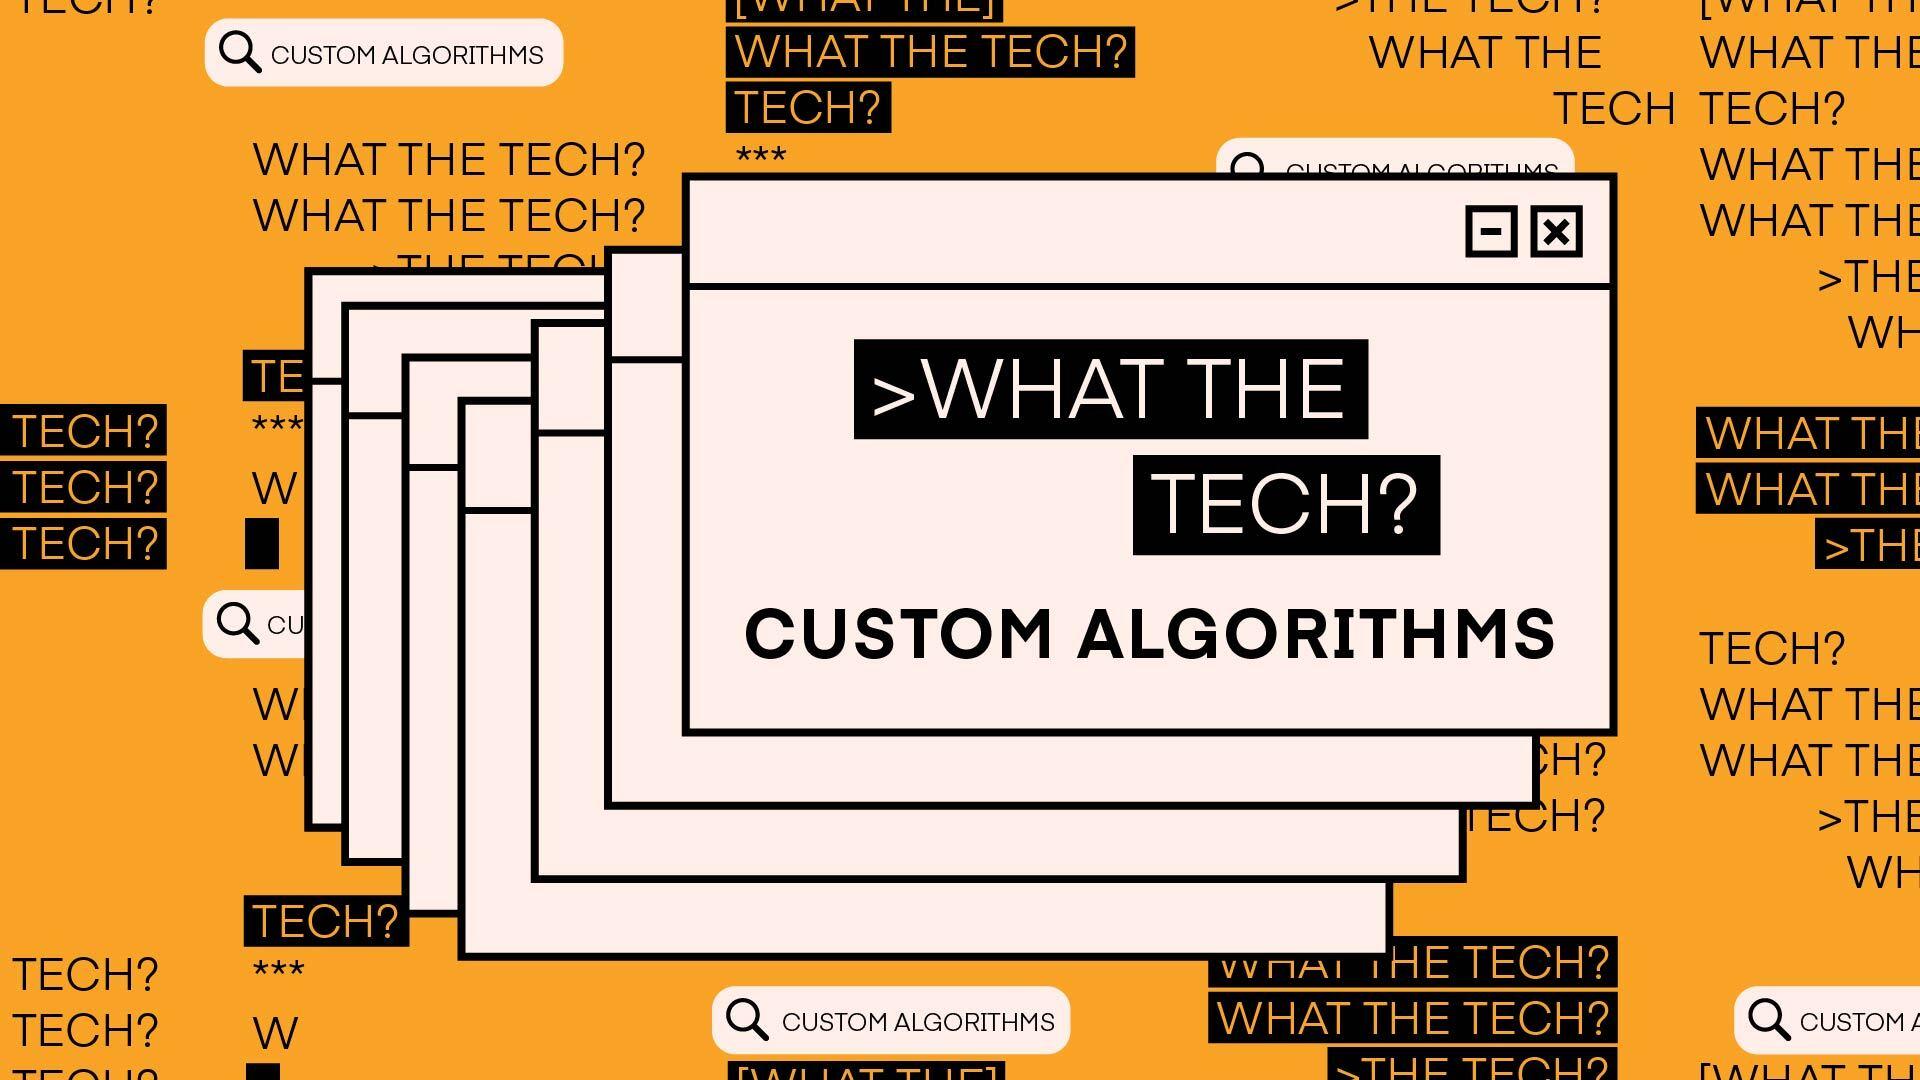 What the Tech are custom algorithms?